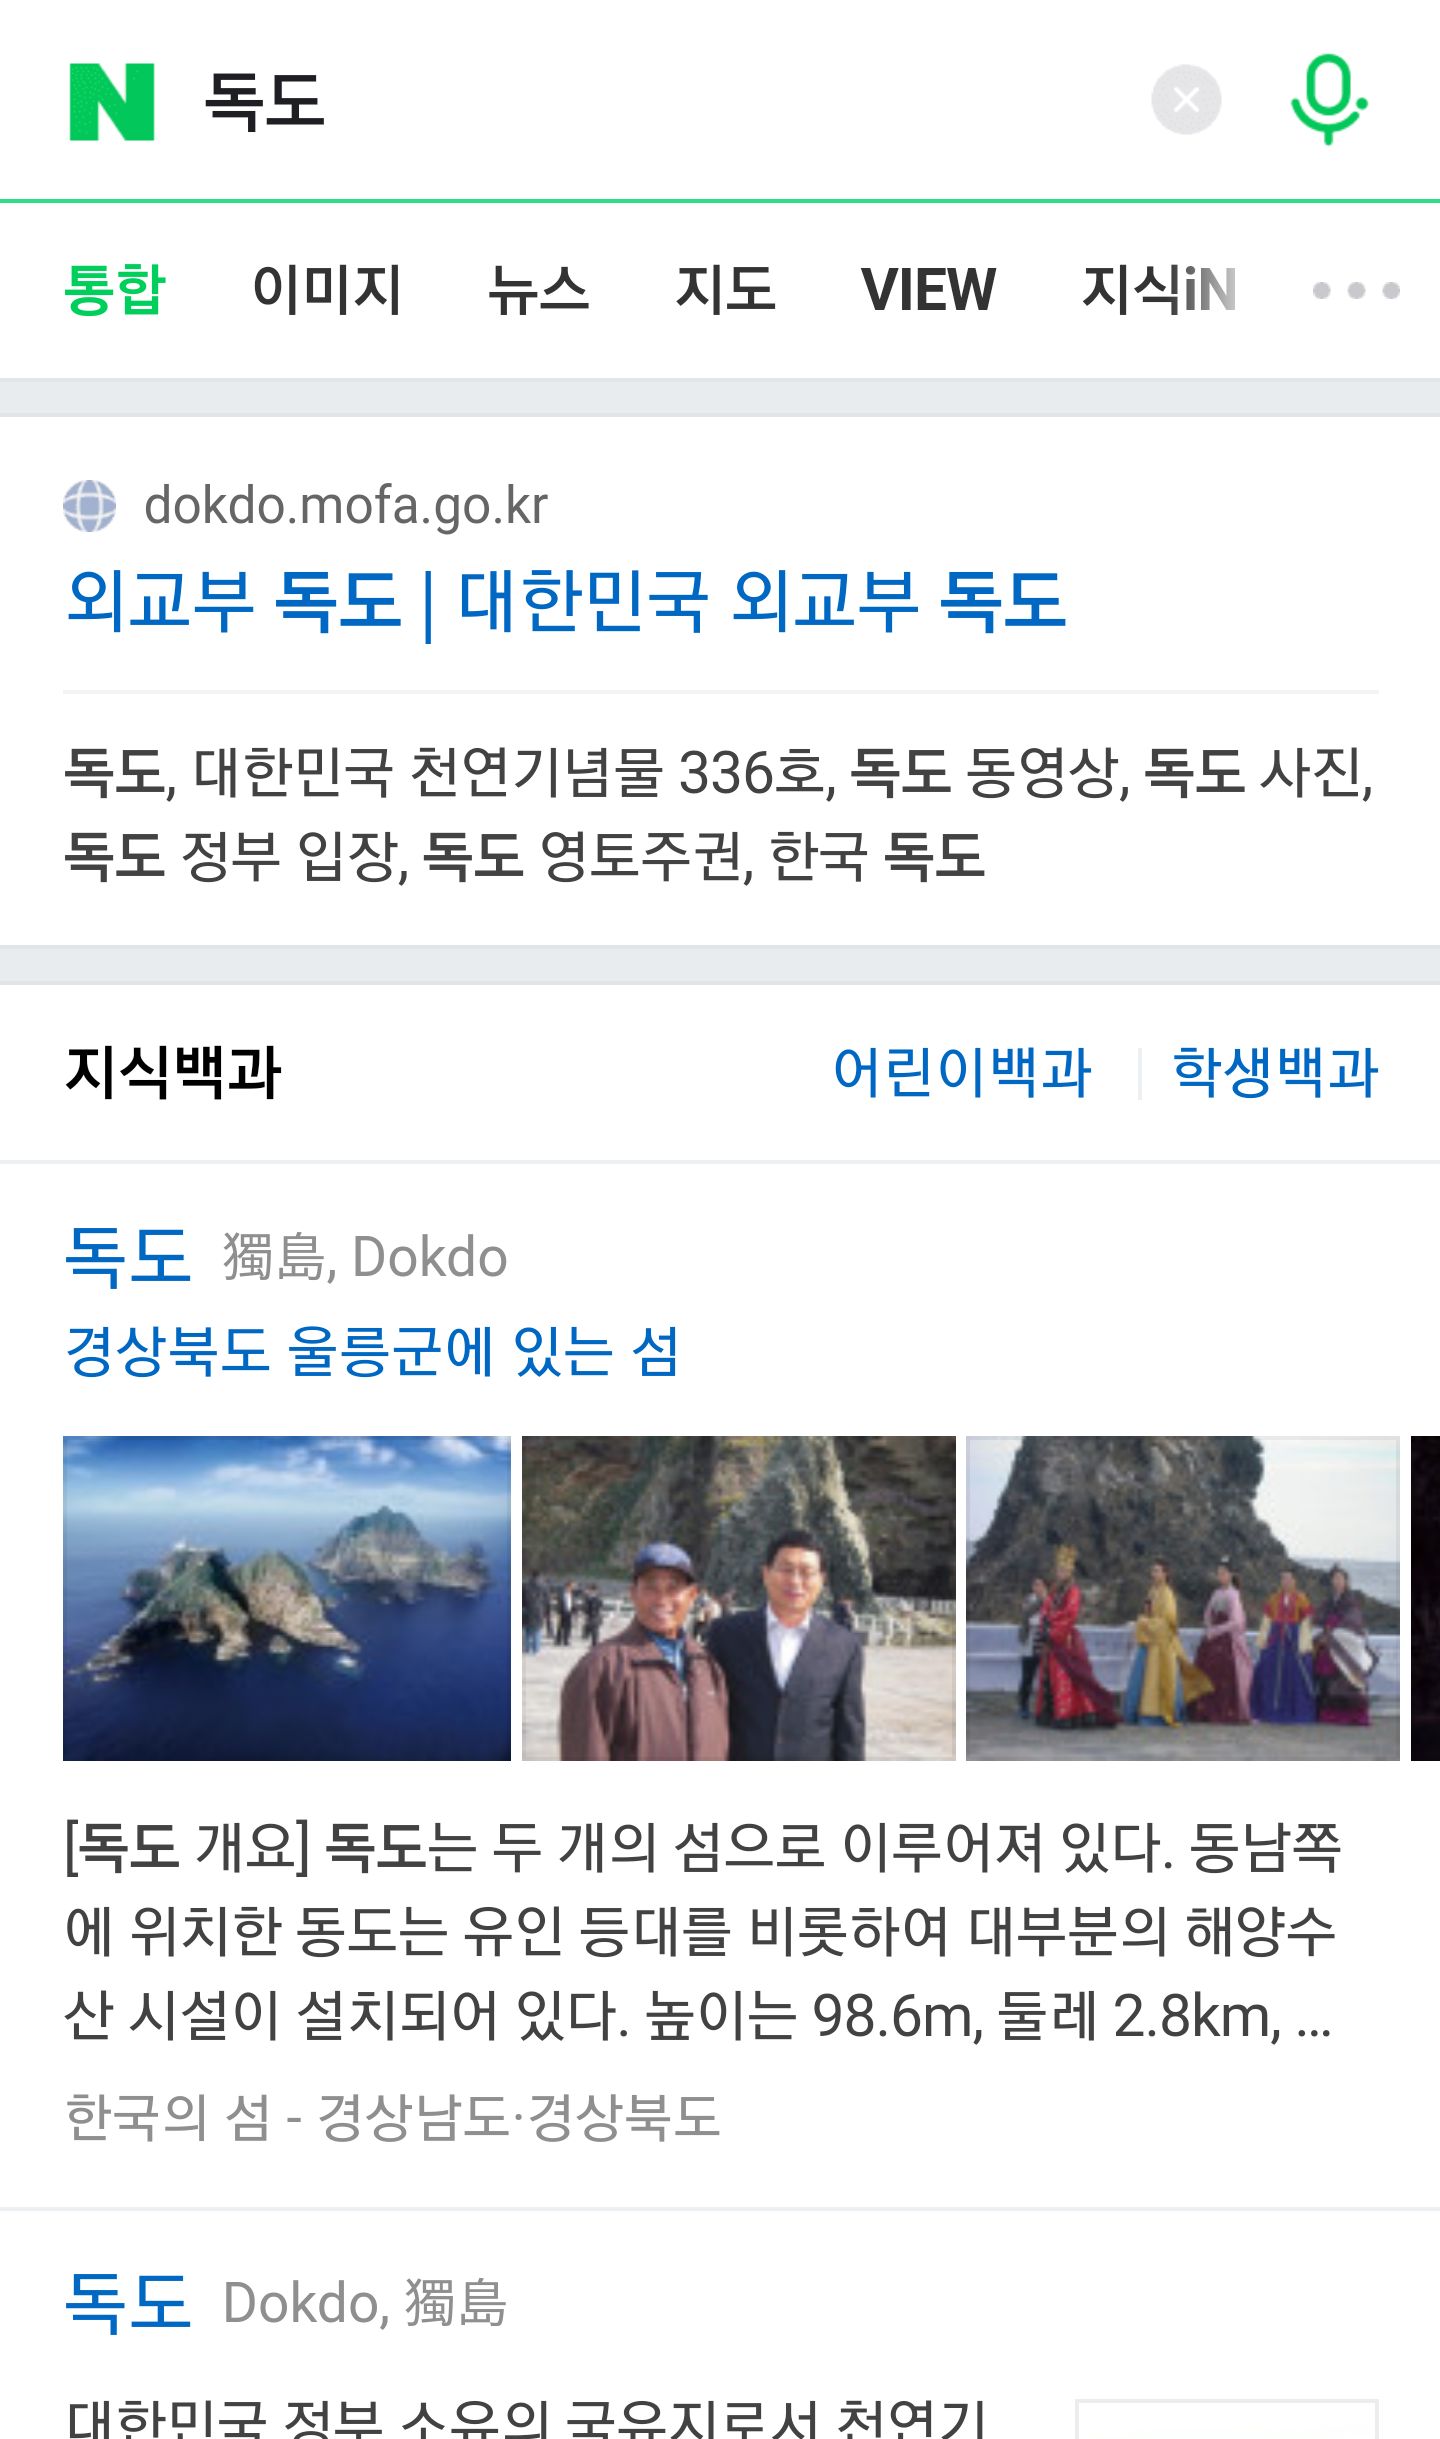 Naver dokdo search result.jpeg